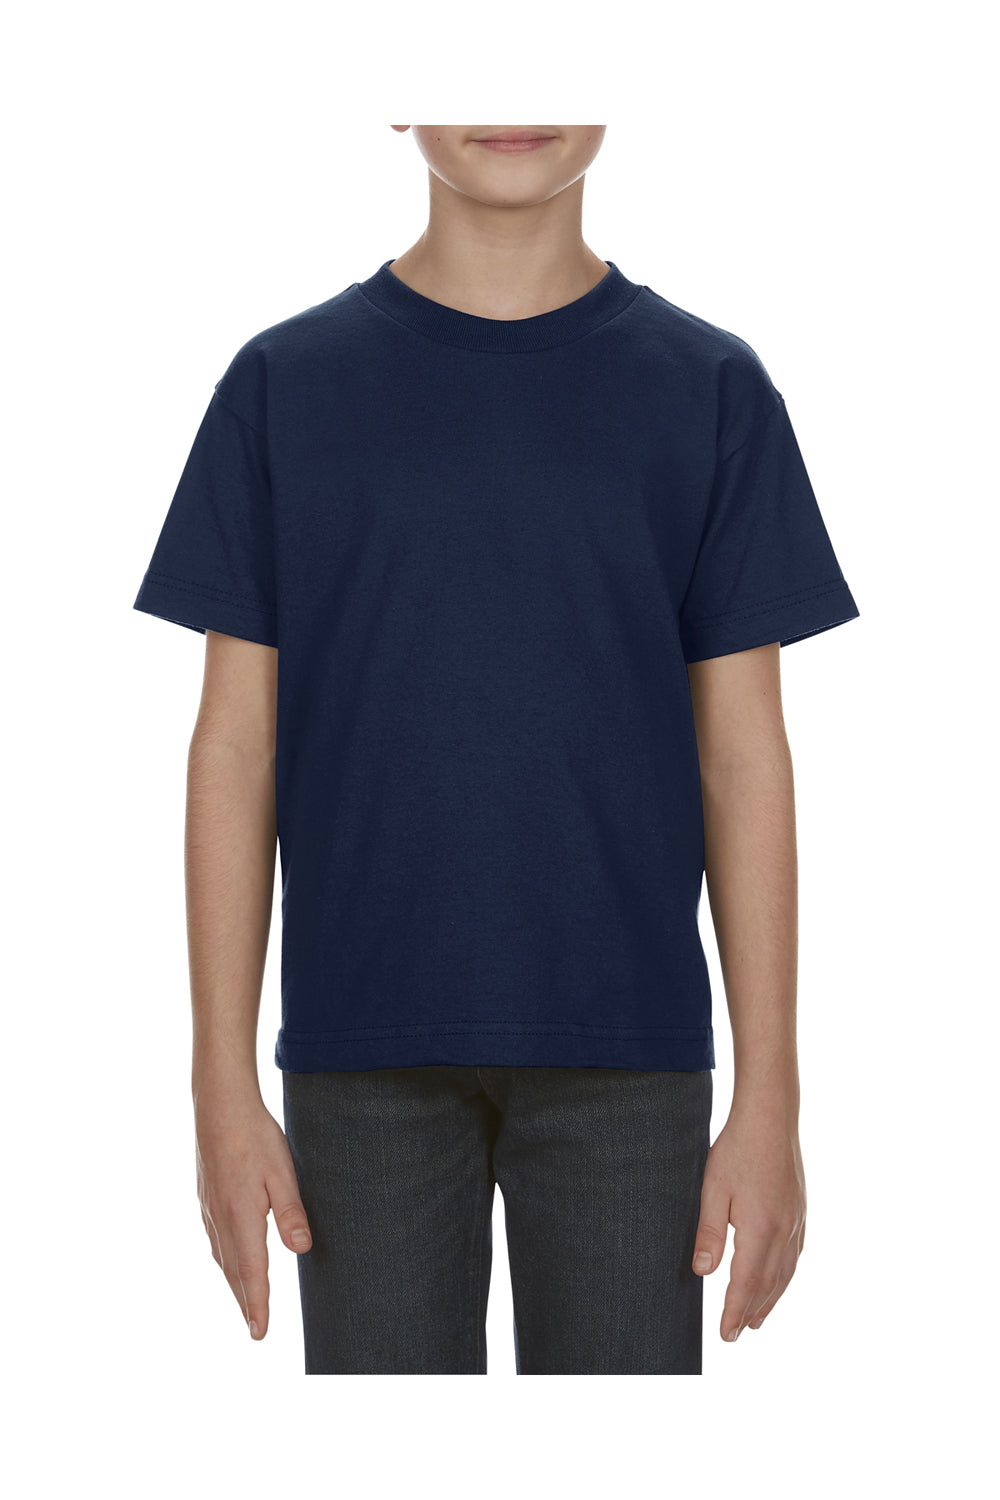 Alstyle AL3381 Youth Short Sleeve Crewneck T-Shirt Navy Blue Front